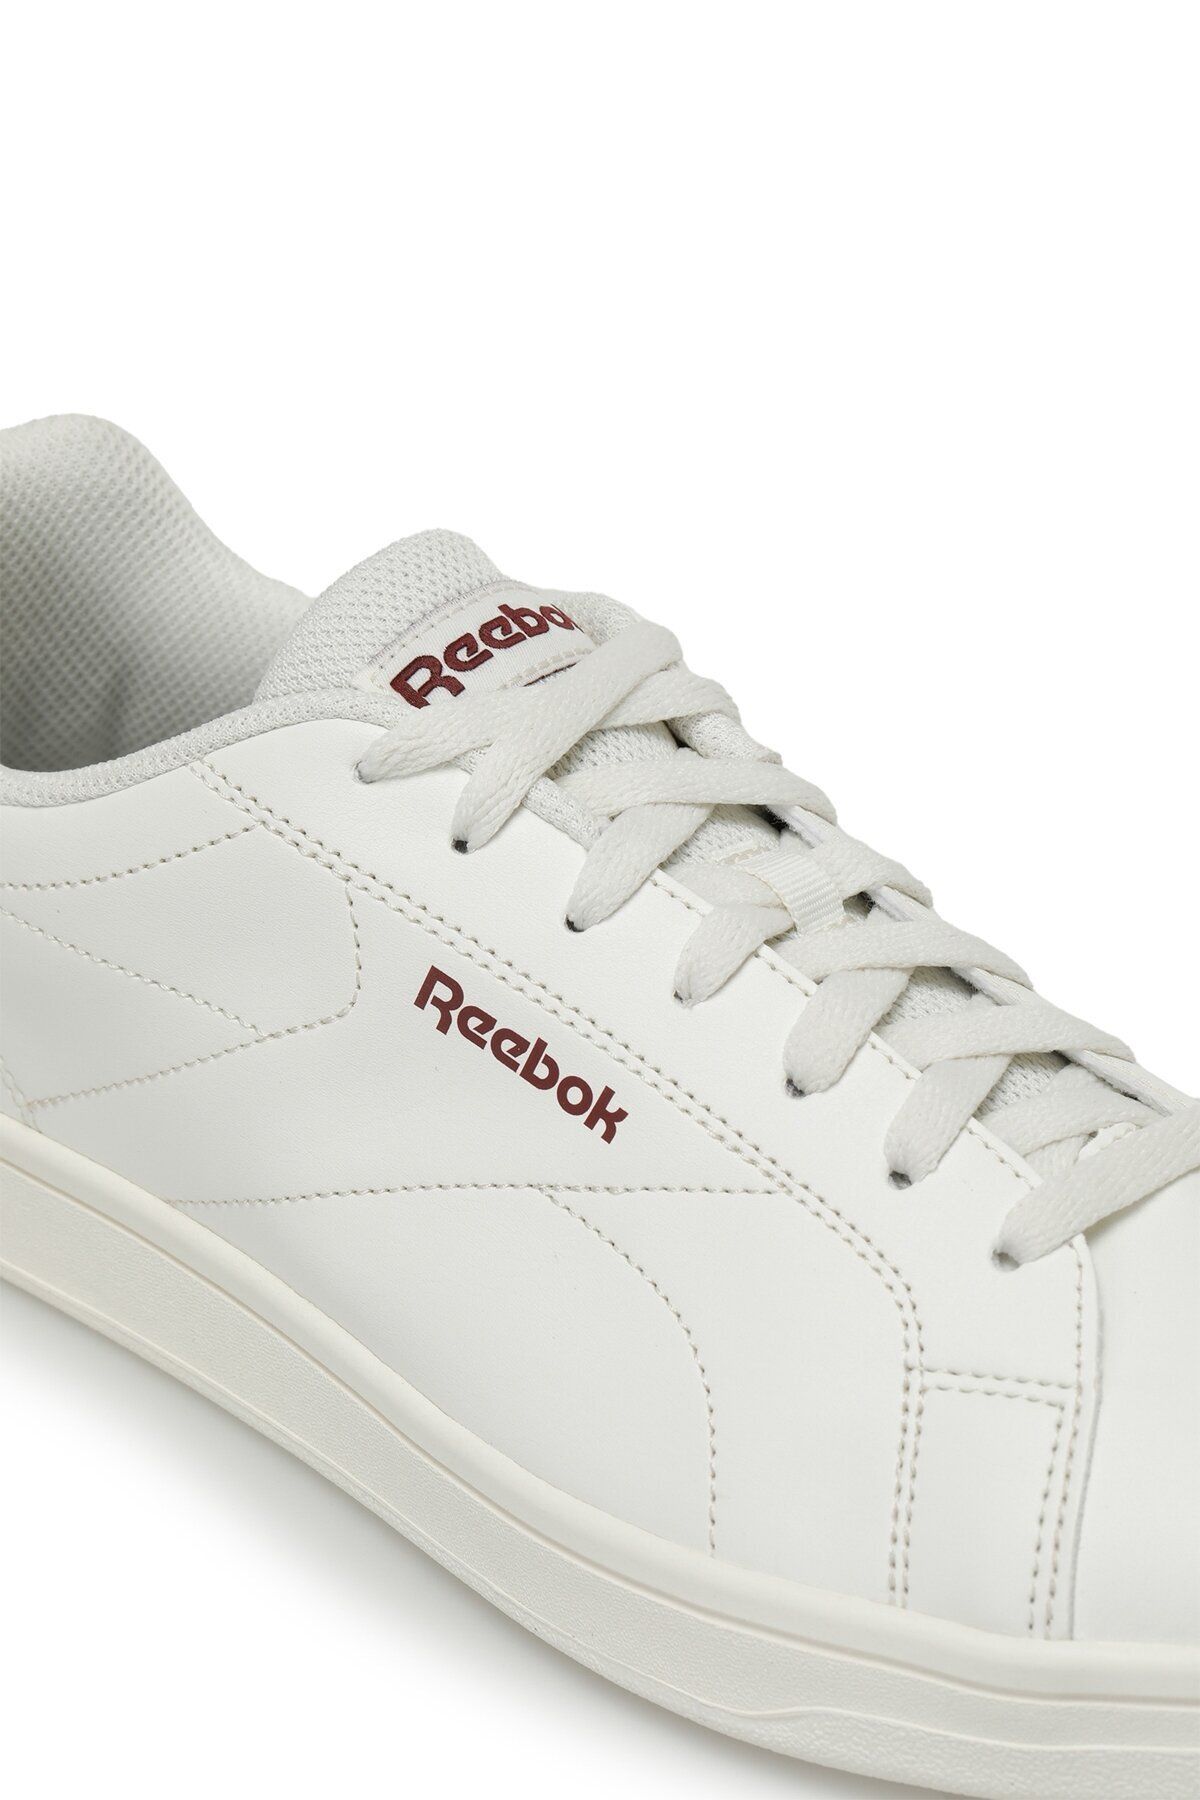 Reebok Royal Complete Cln Broken سفید یونیسکس کفش ورزشی